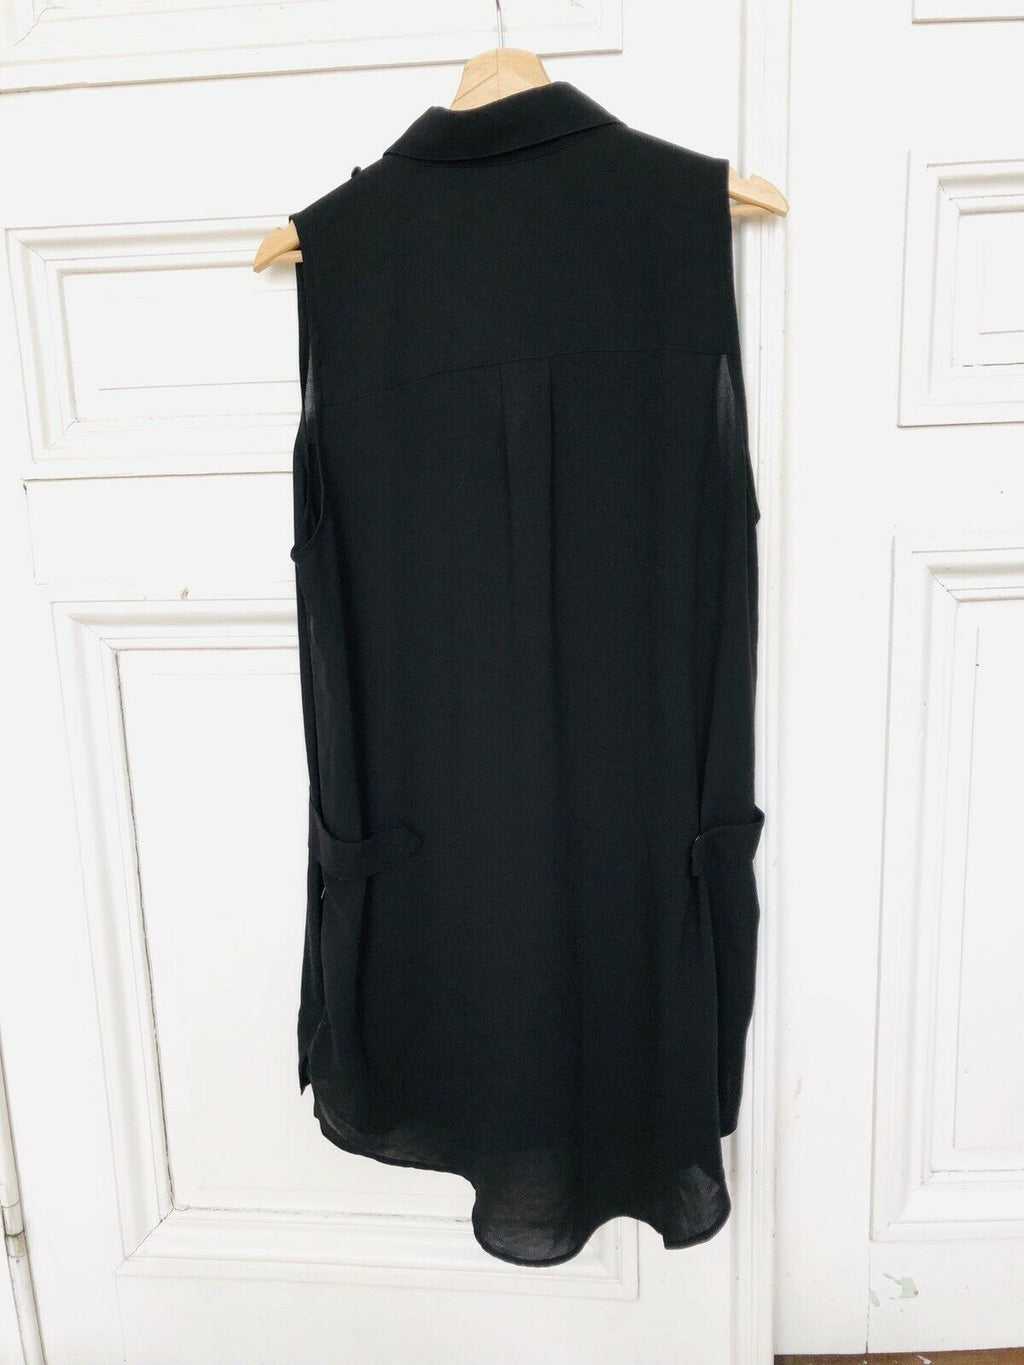 Acne Studios Black Dress Size M